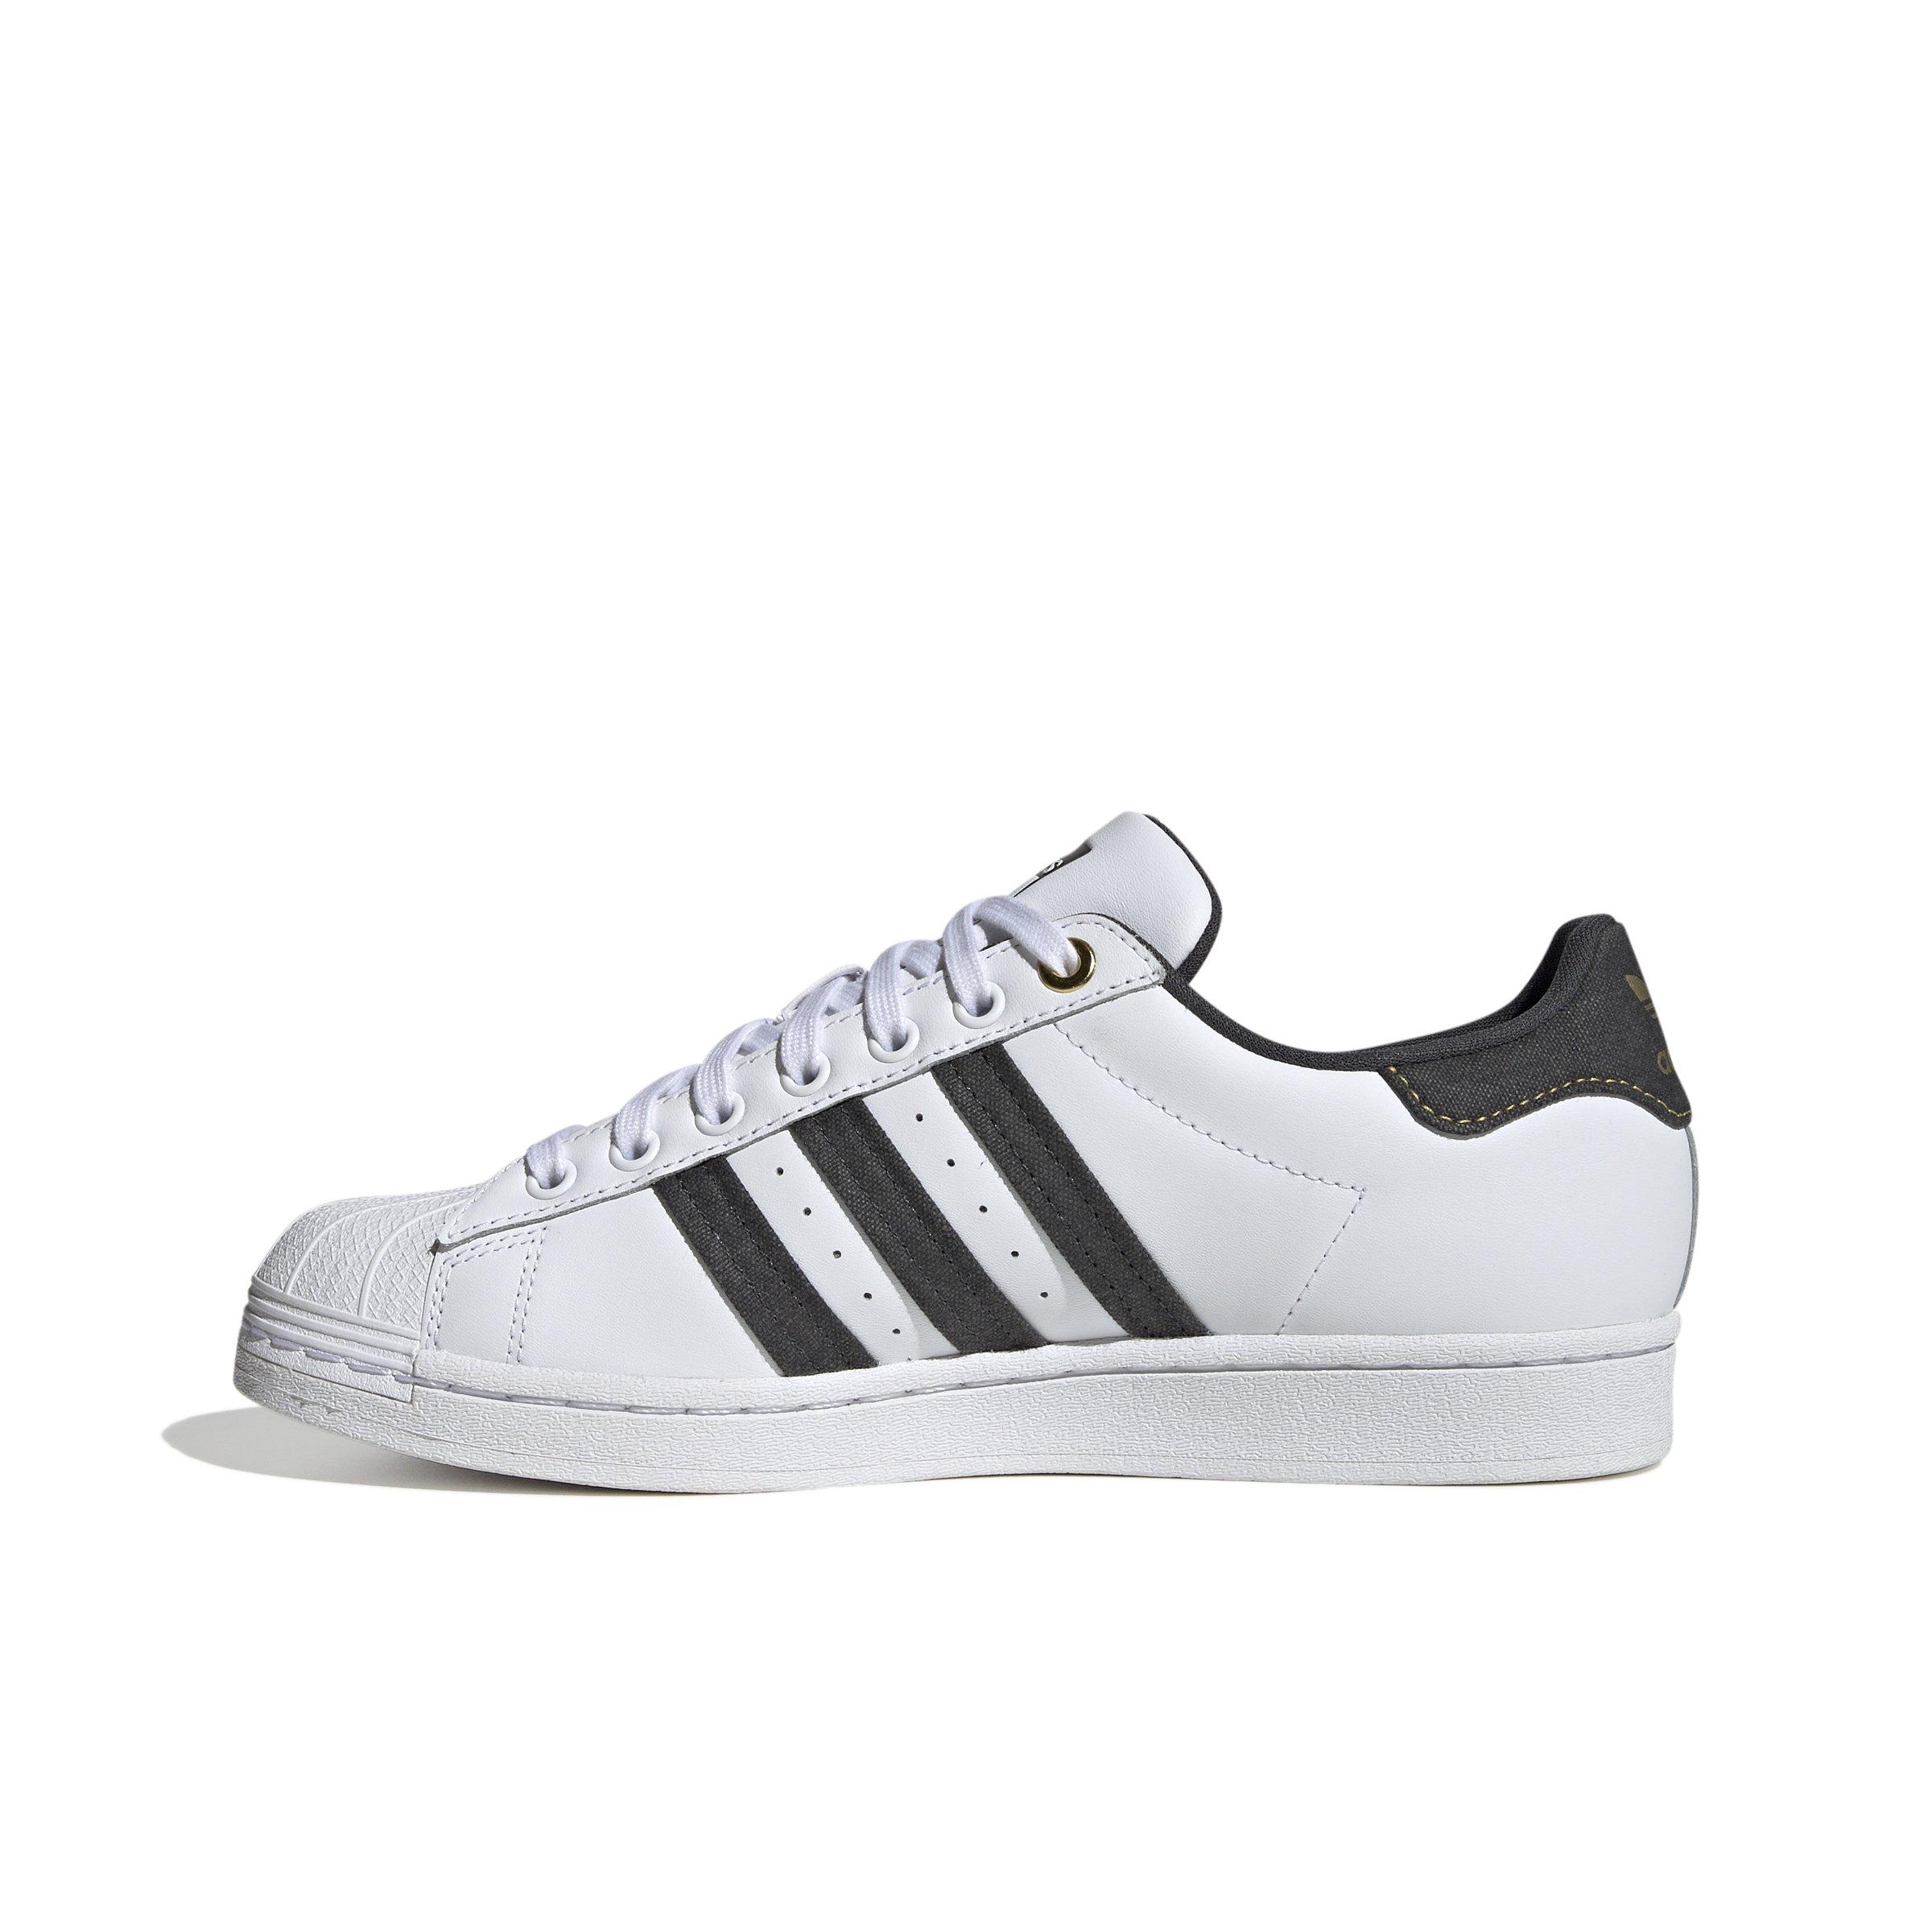 adidas Superstar Athletic Shoe - Core Black / Cloud White / Bright